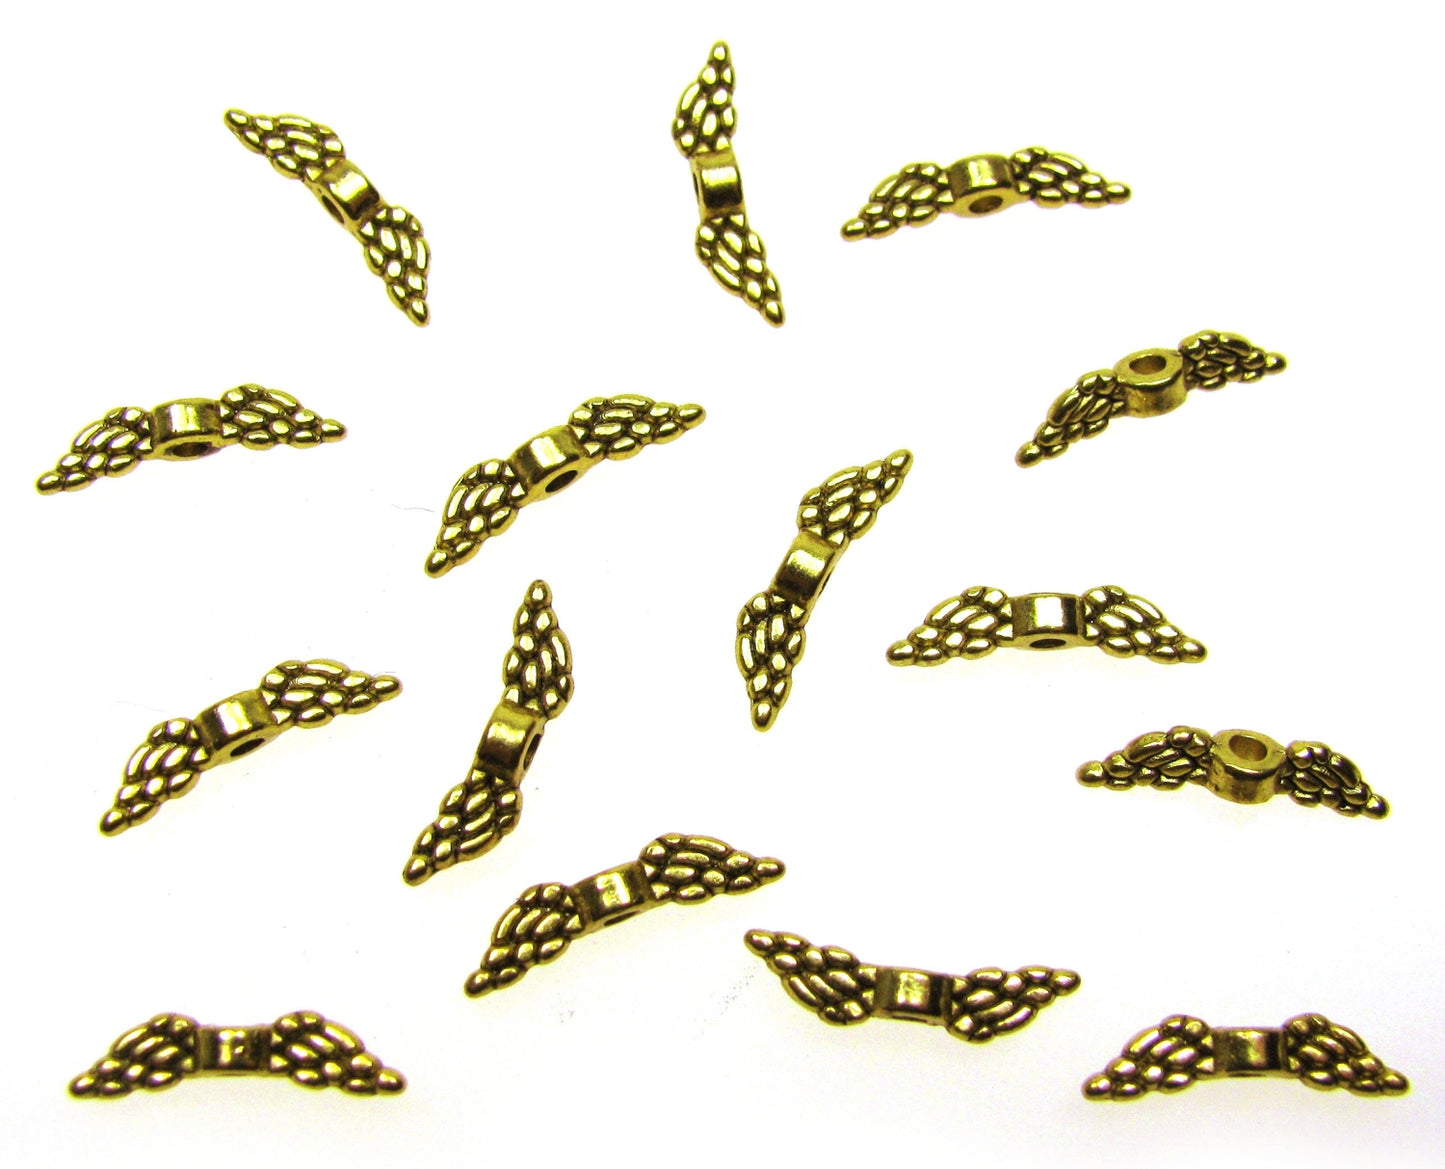 30 Engelsflügel goldfarben 12mm Mikro. Schutzengel mit Perlen basteln, Give away